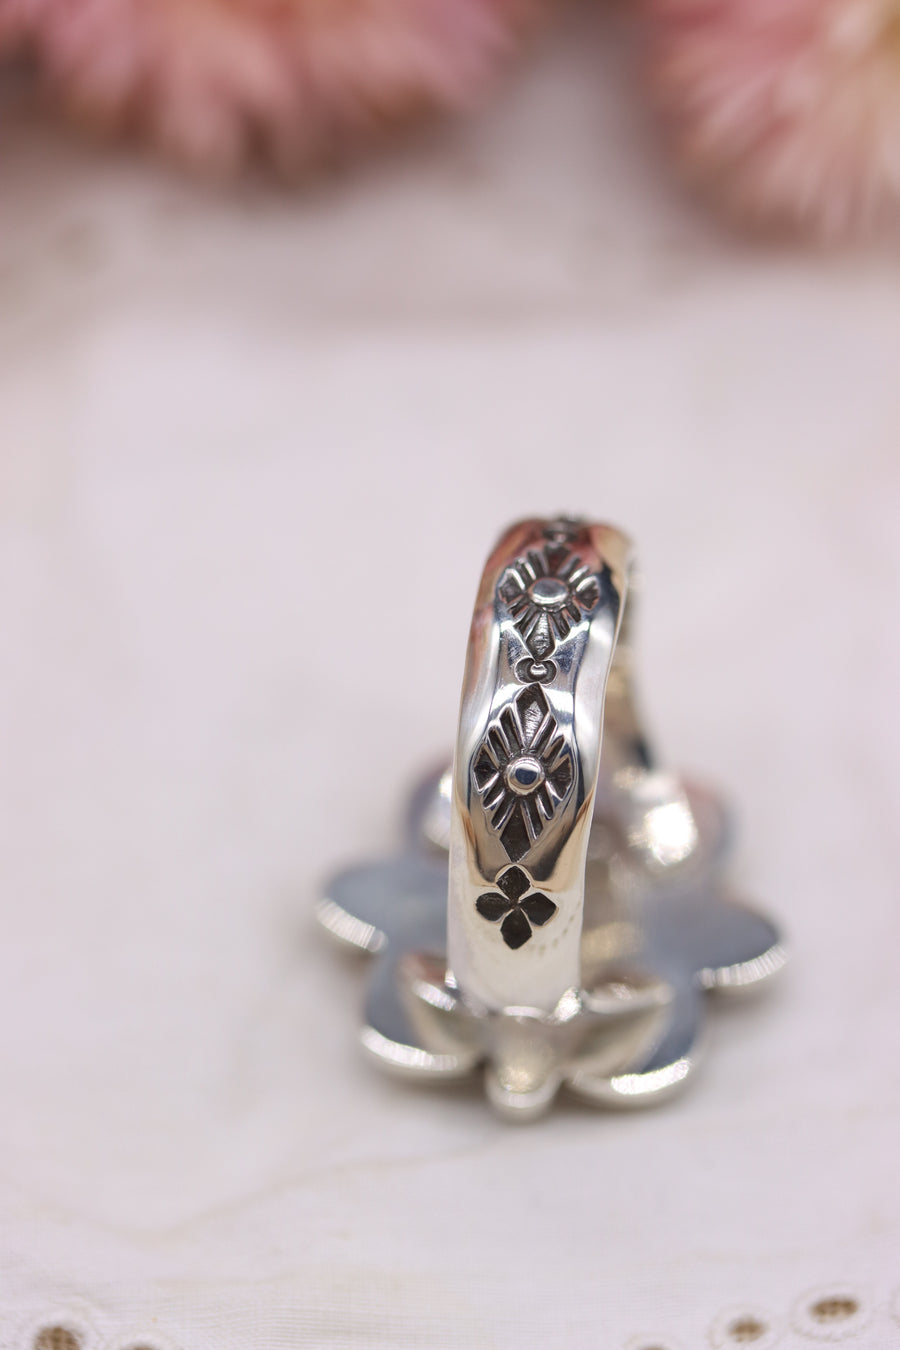 Santa Fe Ring (size 10)